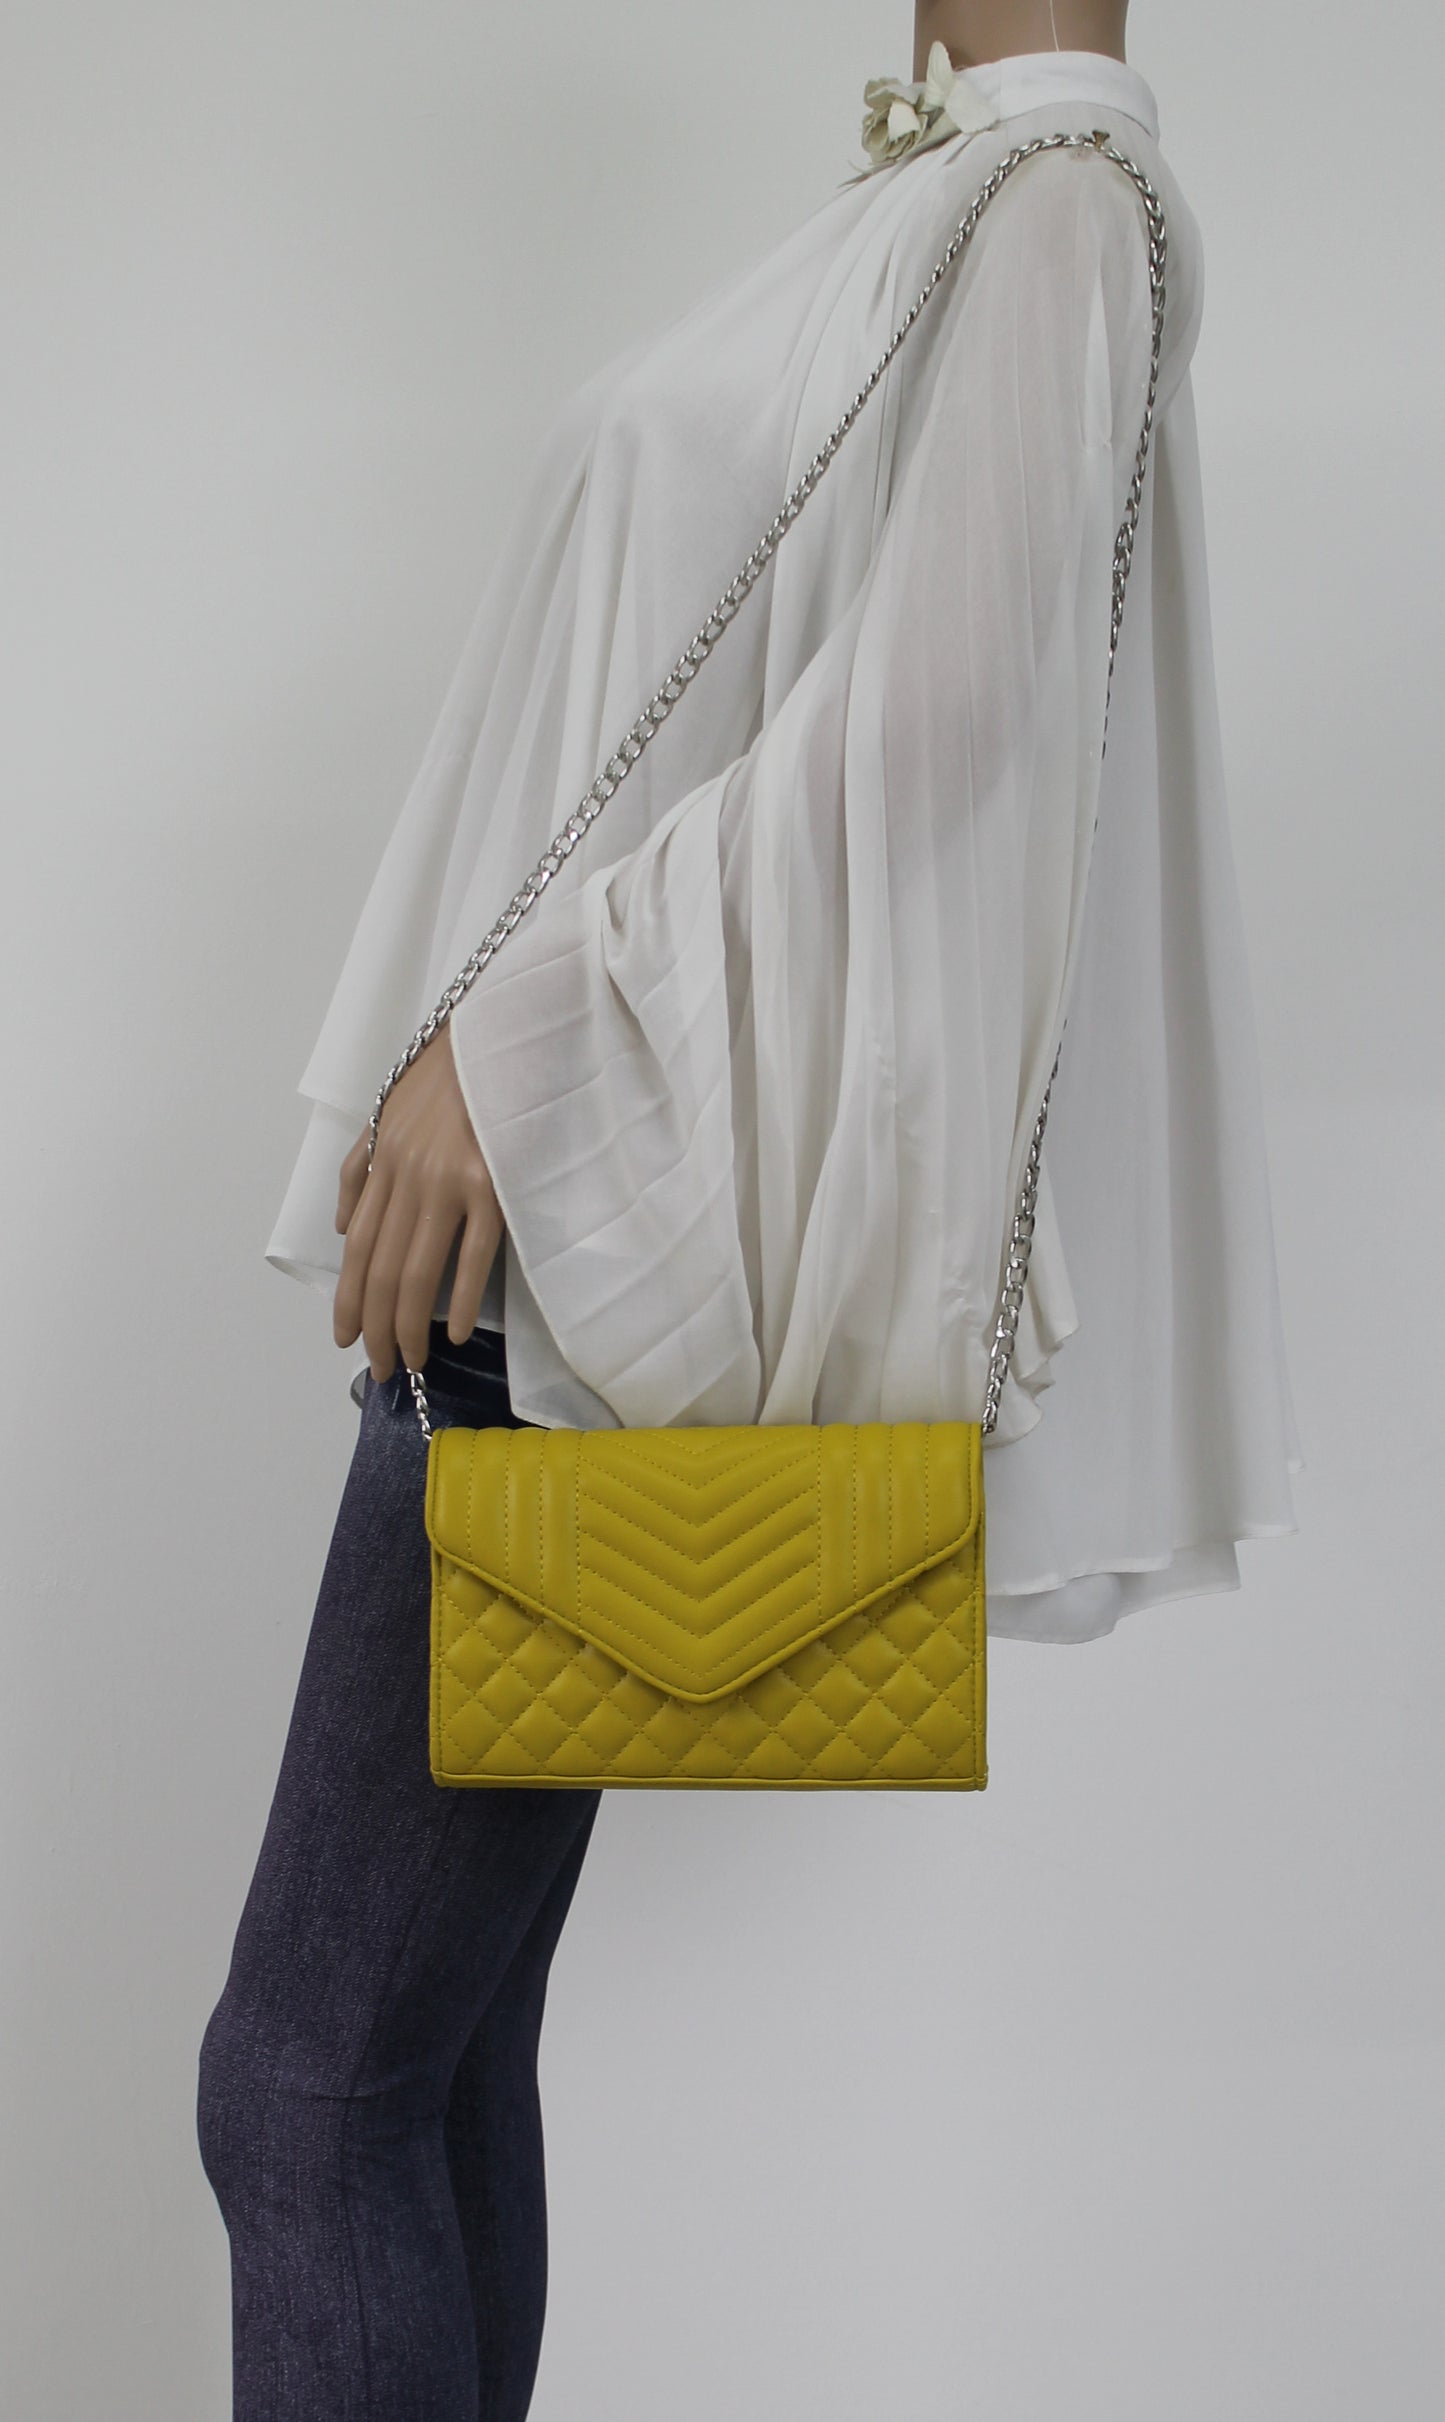 Miya V Stitched Party Evening Clutch Bag Yellow